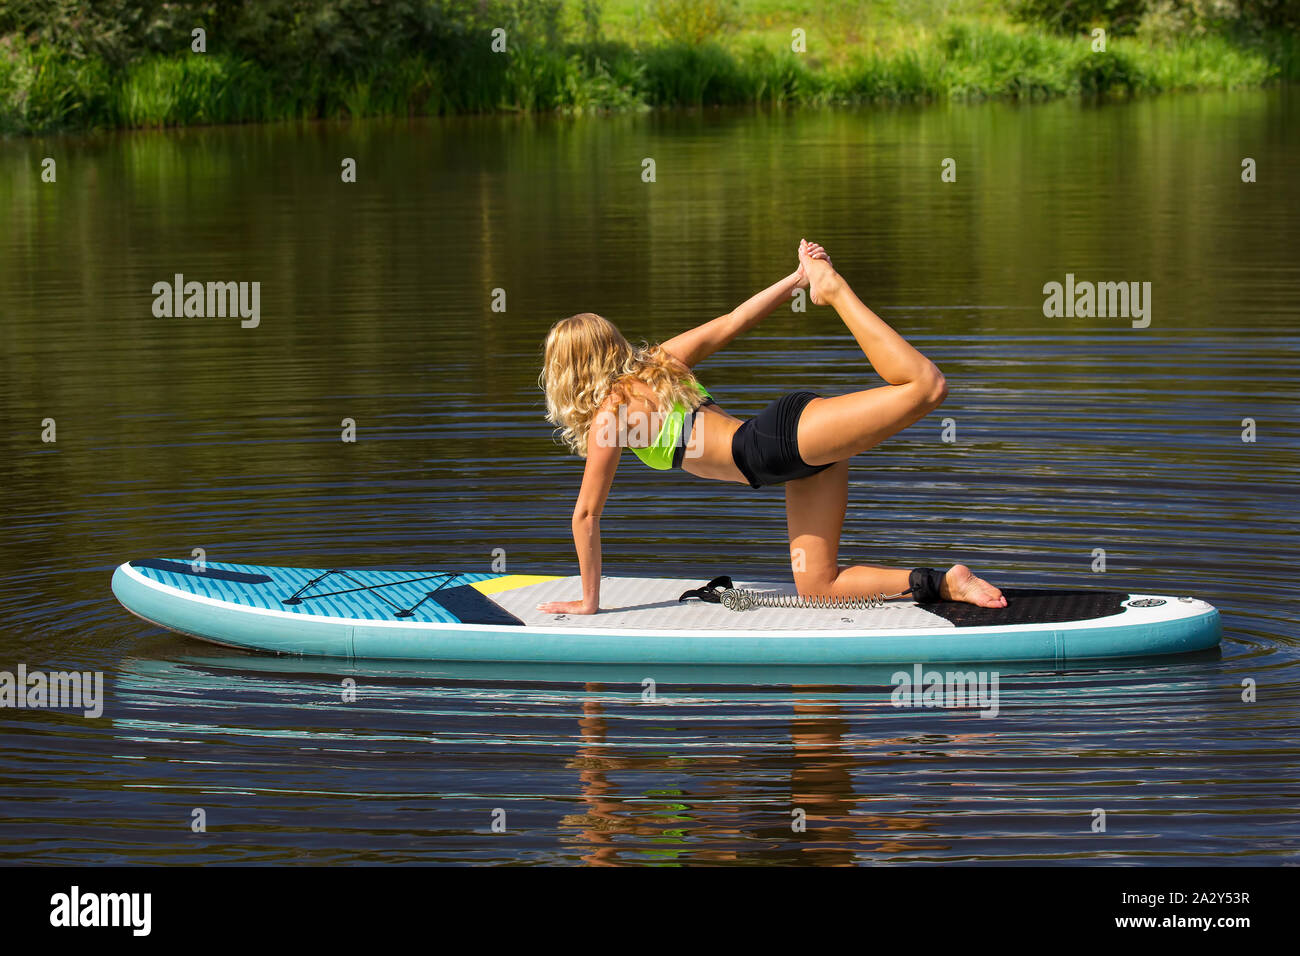 Junge kaukasier Frau auf SUP in yoaga Pose auf dem Fluss Stockfoto